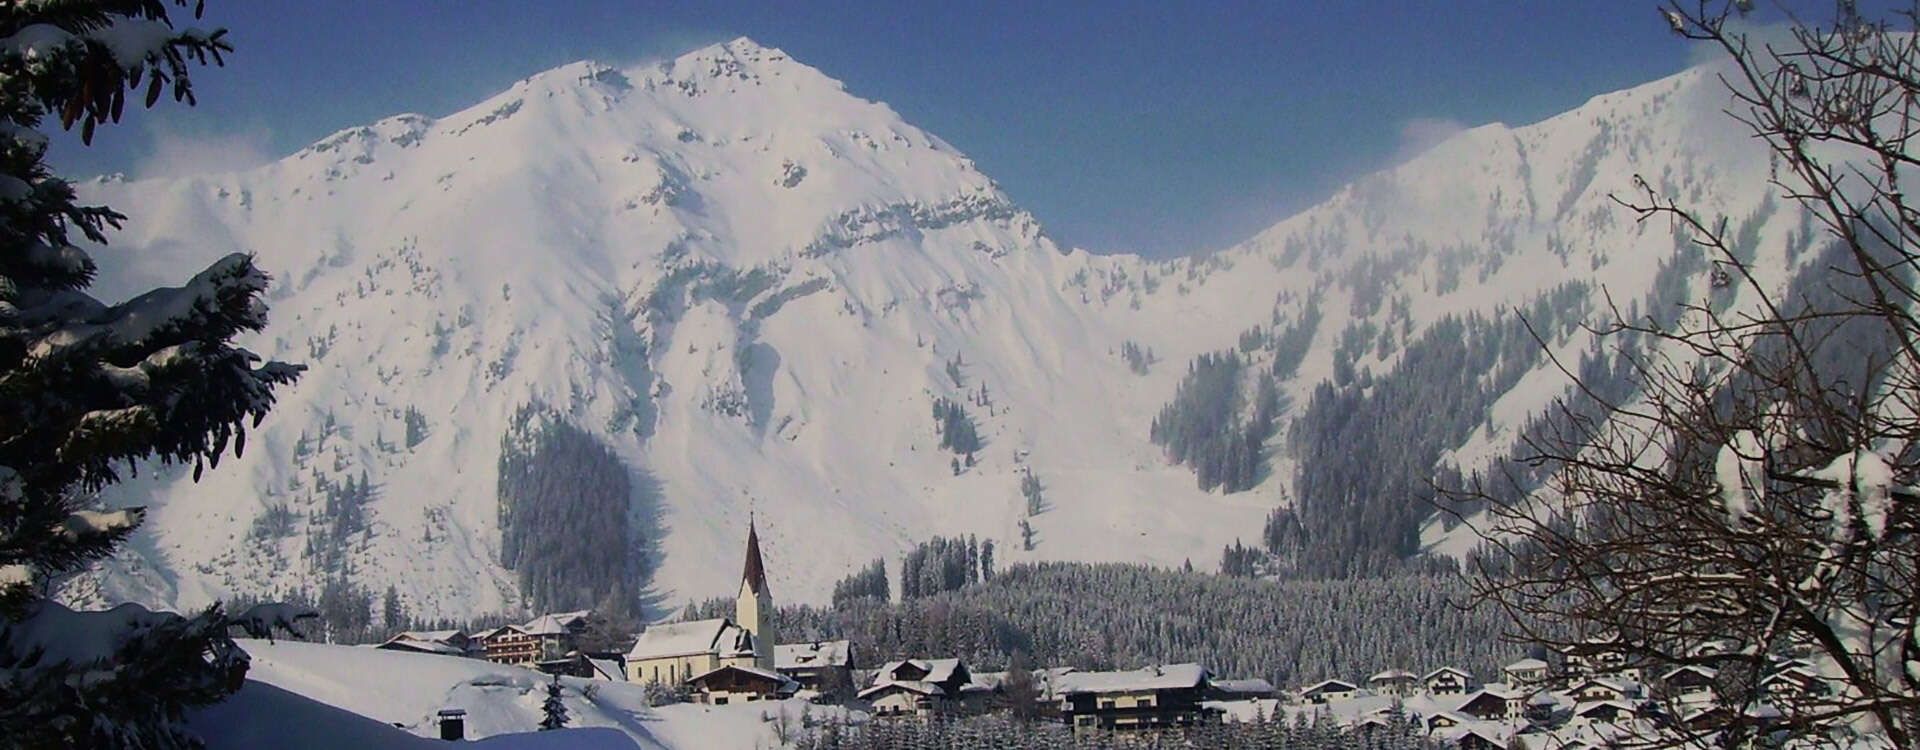 Berwang winter vacation town view Tyrol